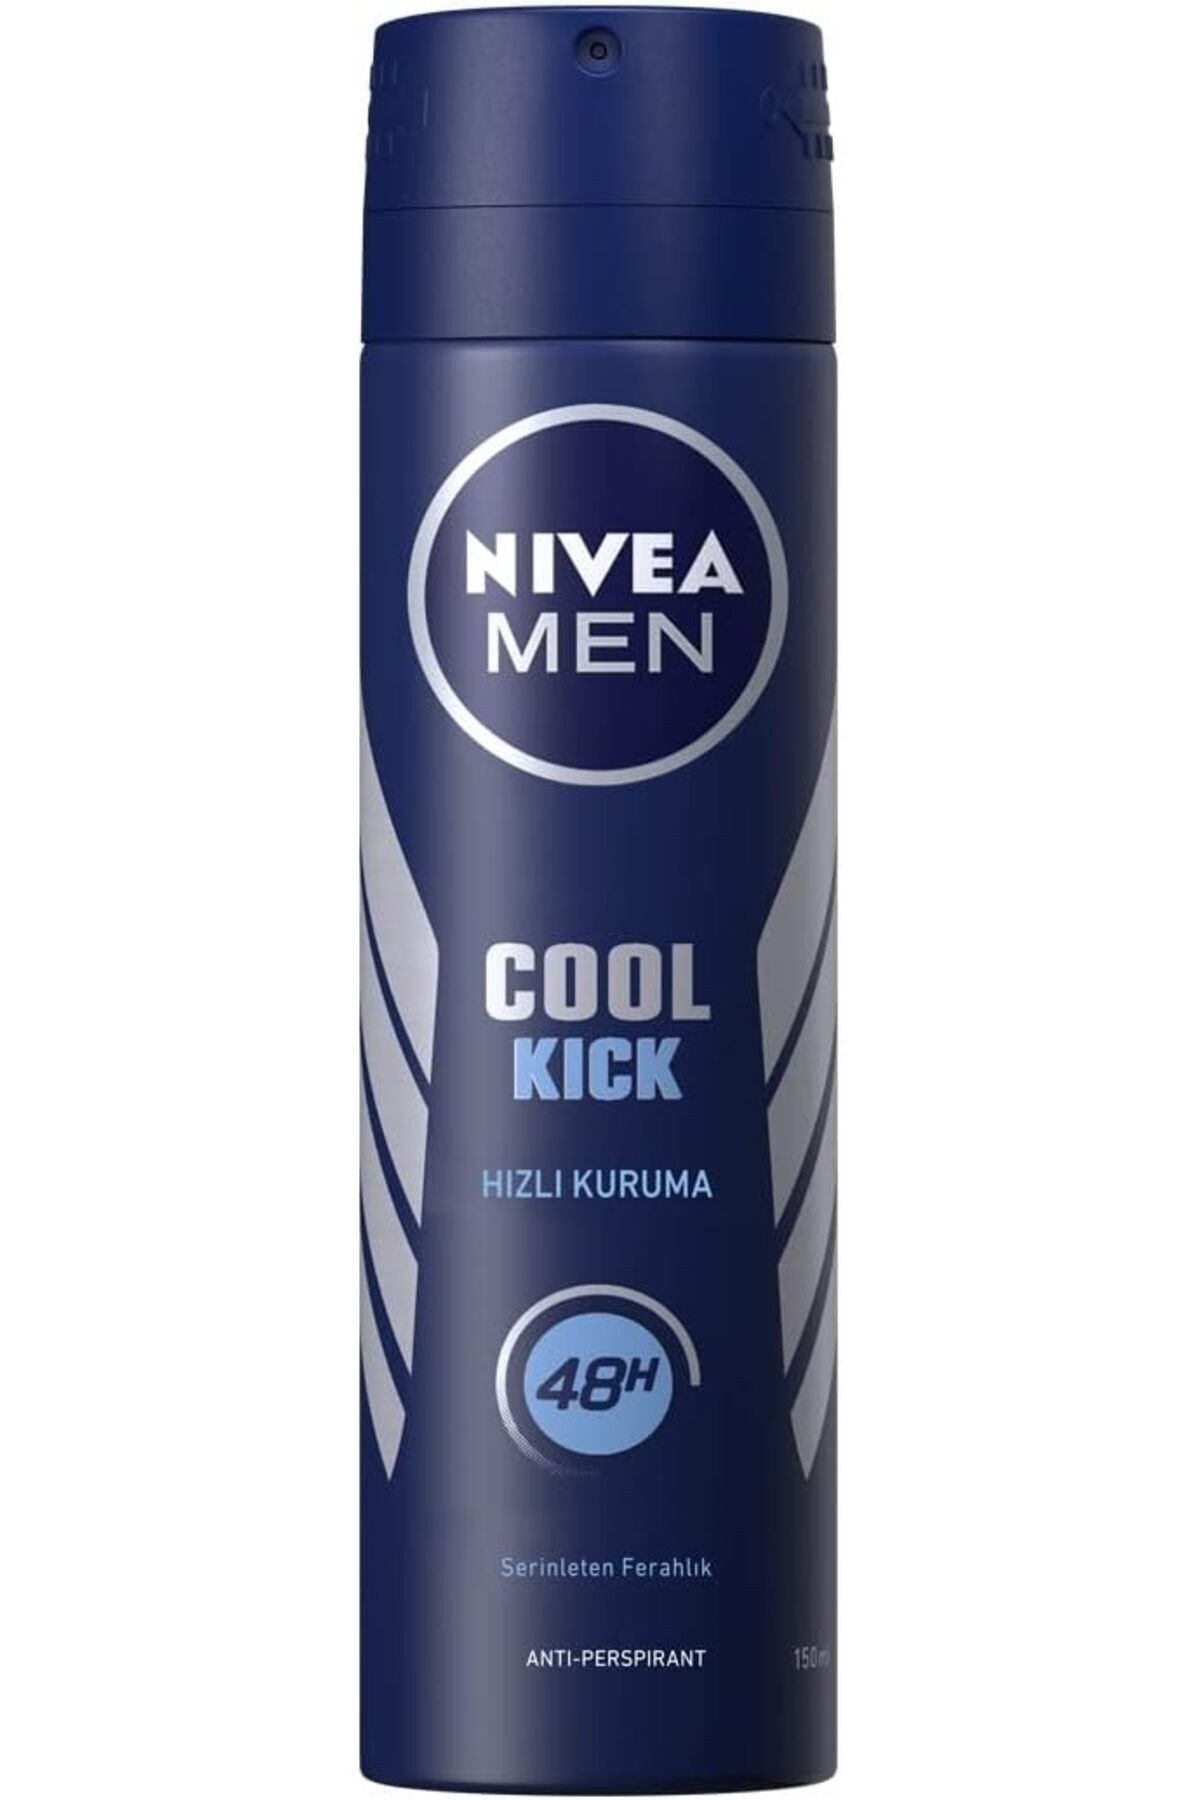 NIVEA Men Erkek Sprey Deodorant Cool Kick, 150 Ml, Ter Ve Ter Kokusuna Karşı 48 Saat Anti-perspirant